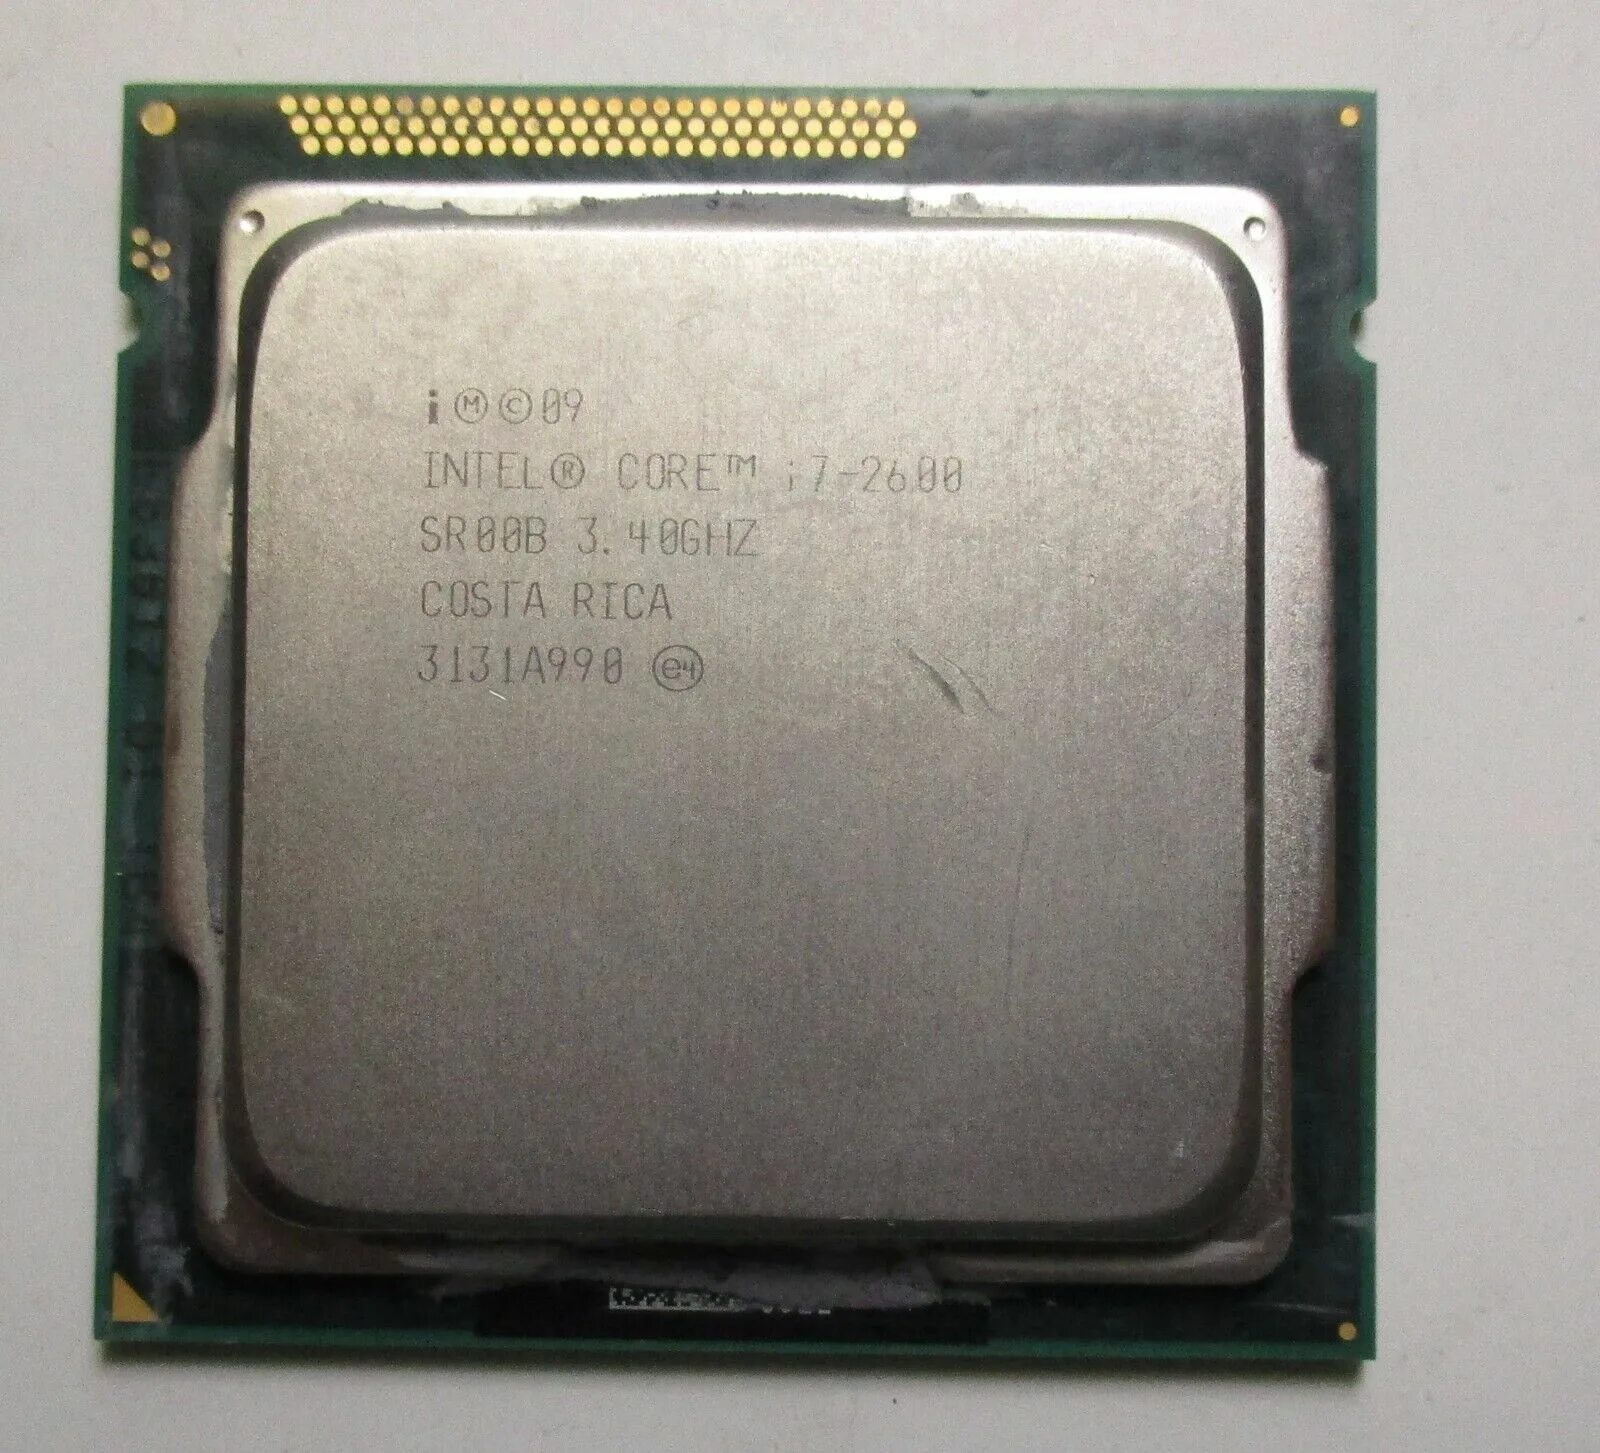 Интел i7 2600. Процессор Intel Core i7 2600. Intel i7 2600 CPU @3.40. Intel(r) Core(TM) i7-2600 CPU @ 3.40GHZ. I5-3470 CPU @ 3.20GHZ 3.50 GHZ.